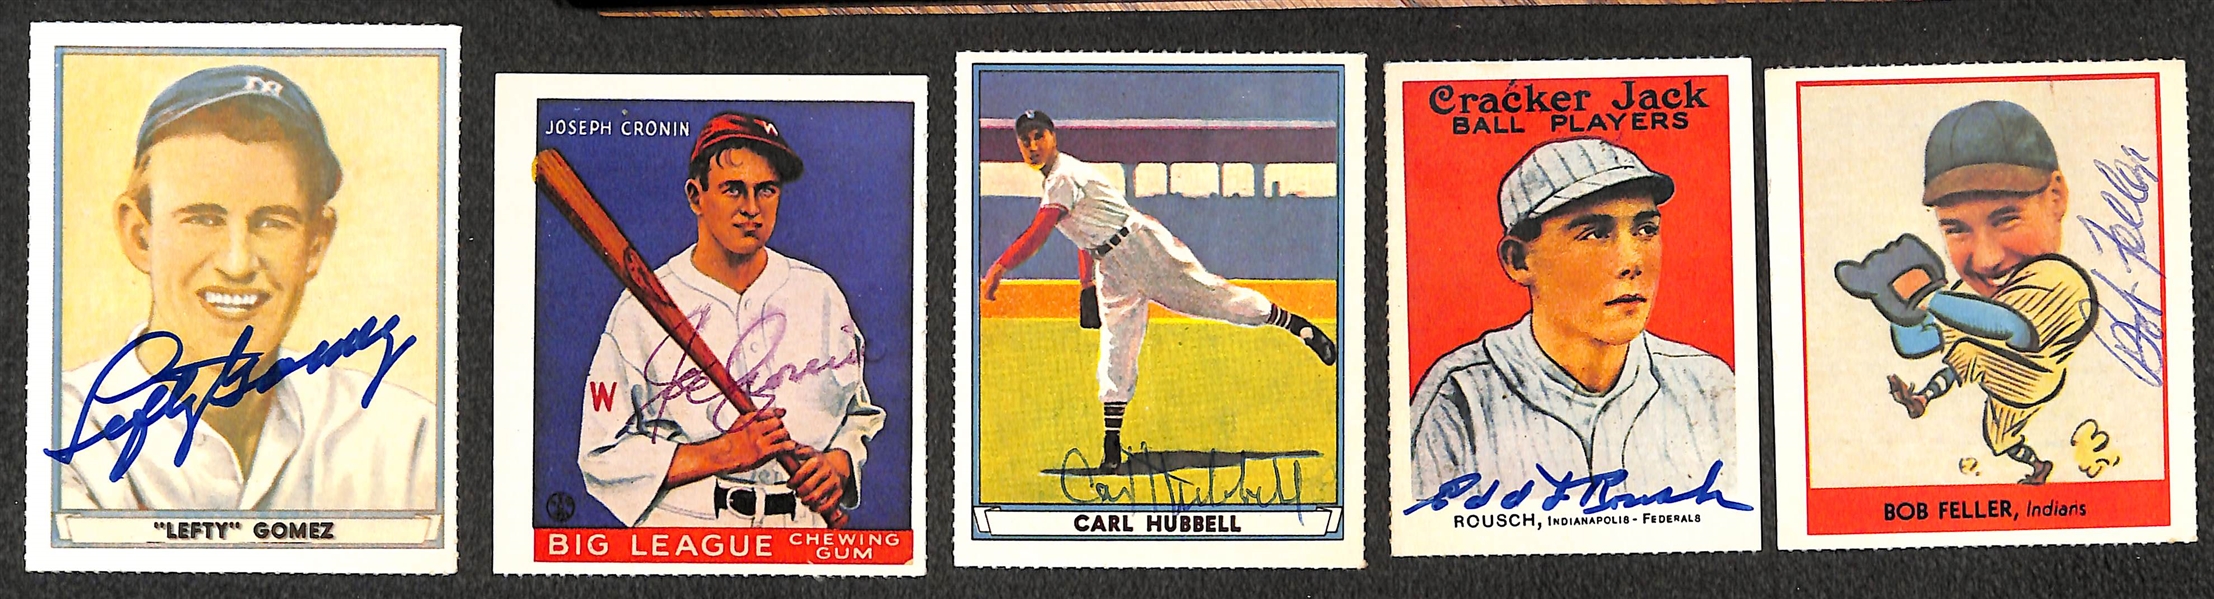 (15) Autographed Reprint Baseball Cards & (4) 1968 R.G. Laughlin Mostly HOF Autographed Cards (JSA Auction Letter)